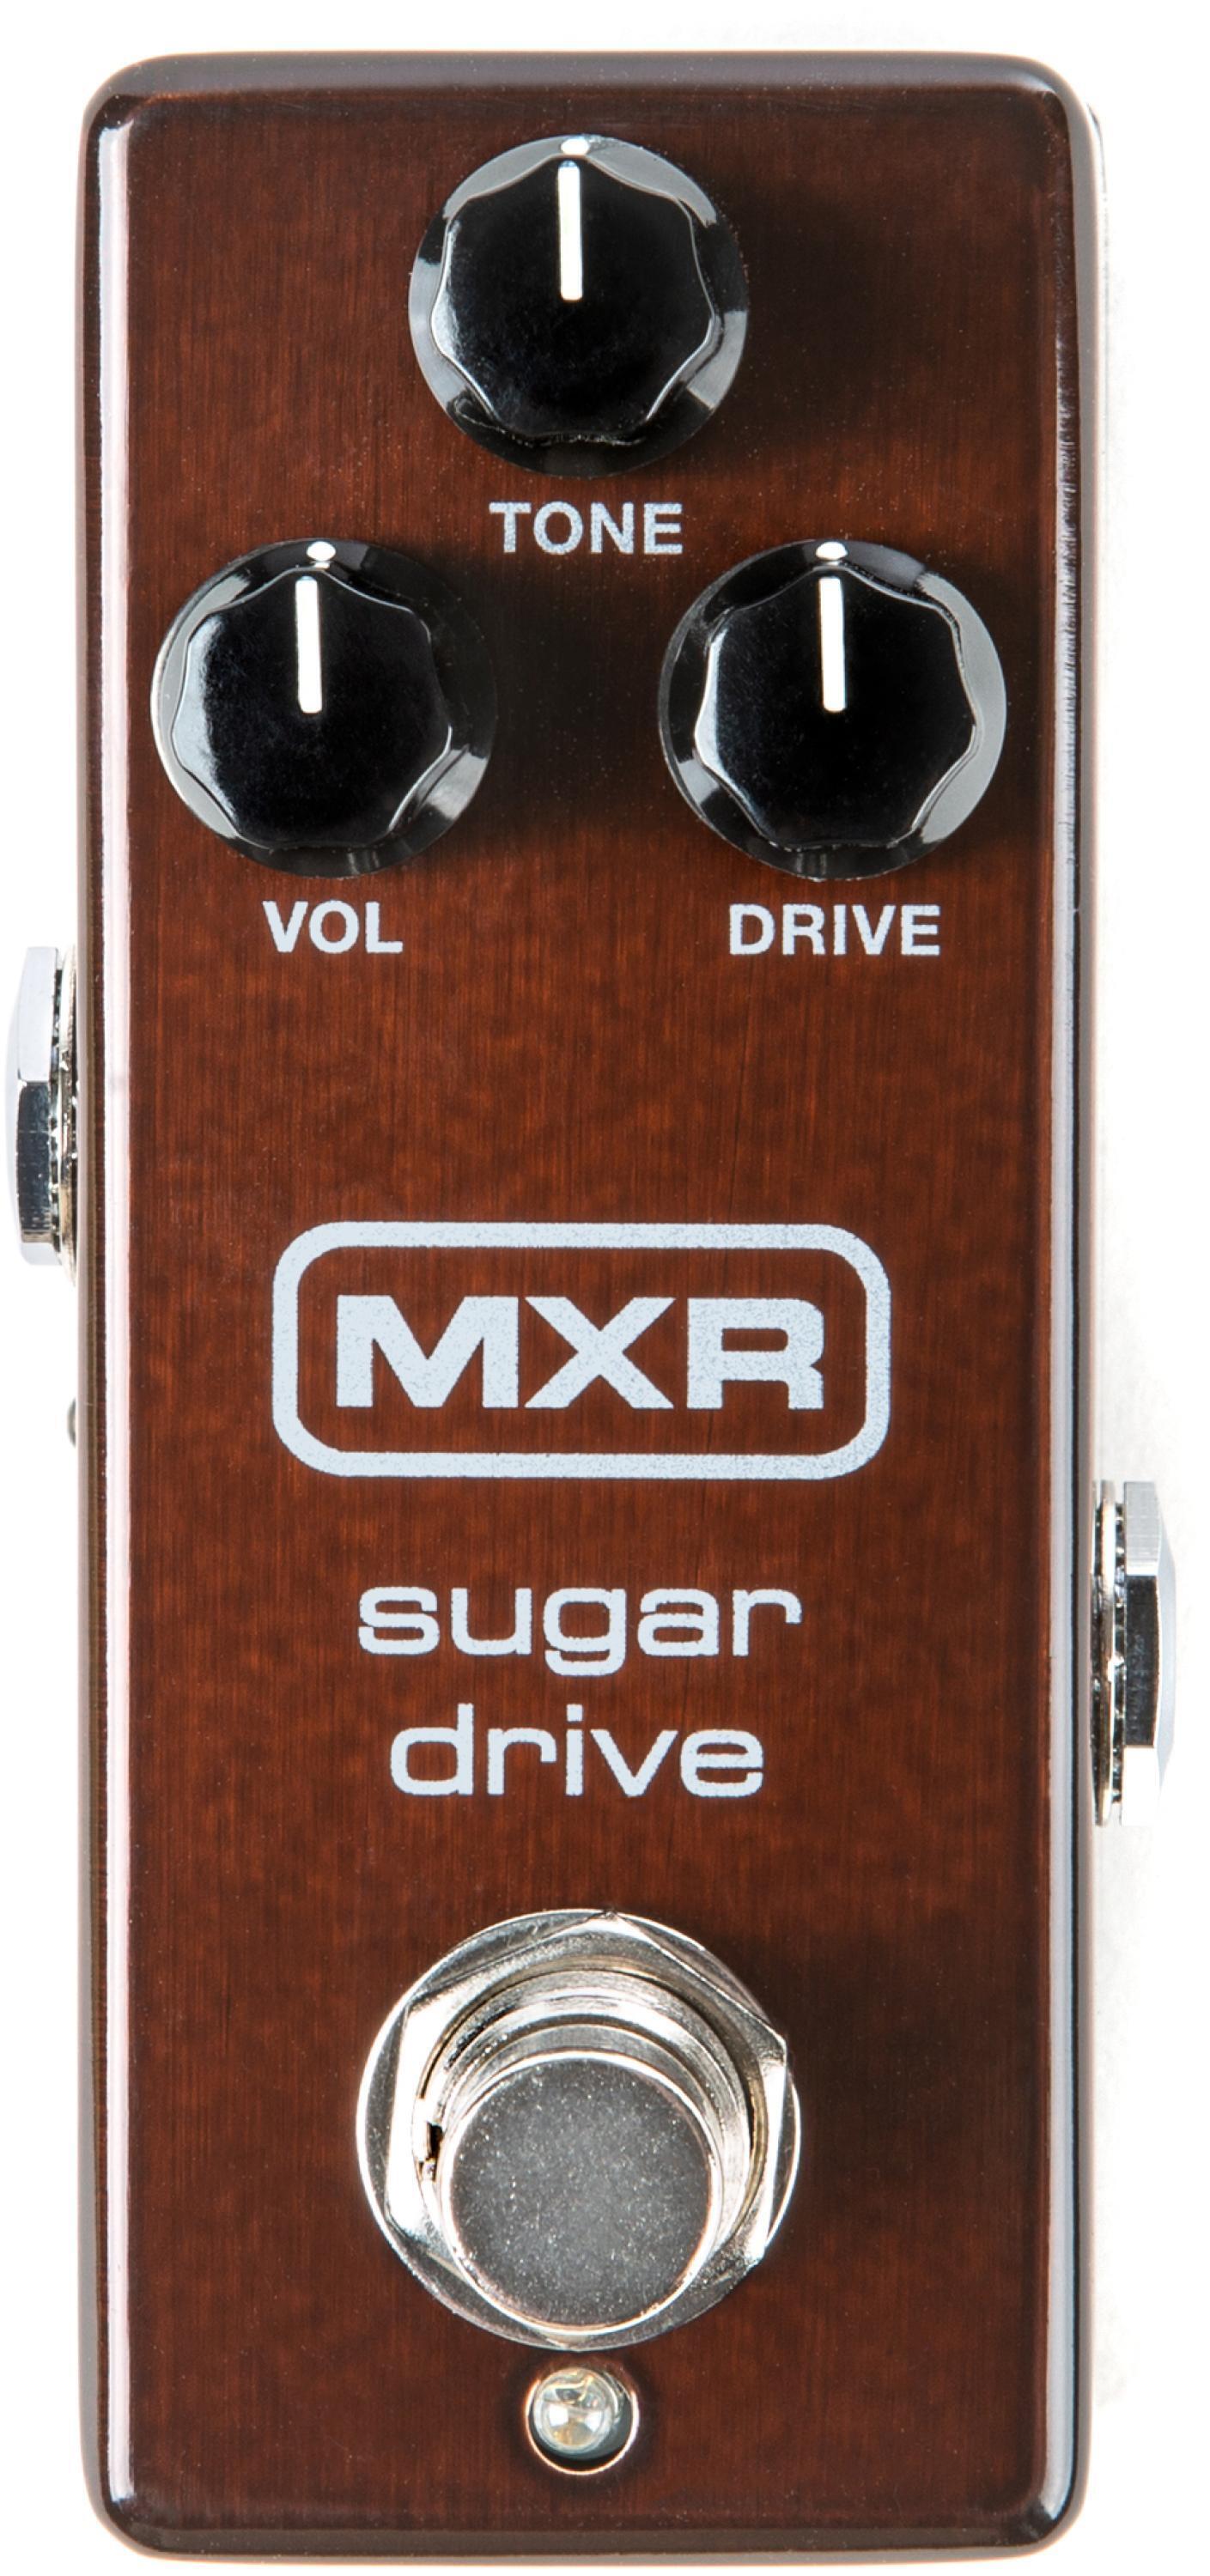 MXR M294 Sugar Drive Overdrive Pedal - Limited Edition Brown Sugar